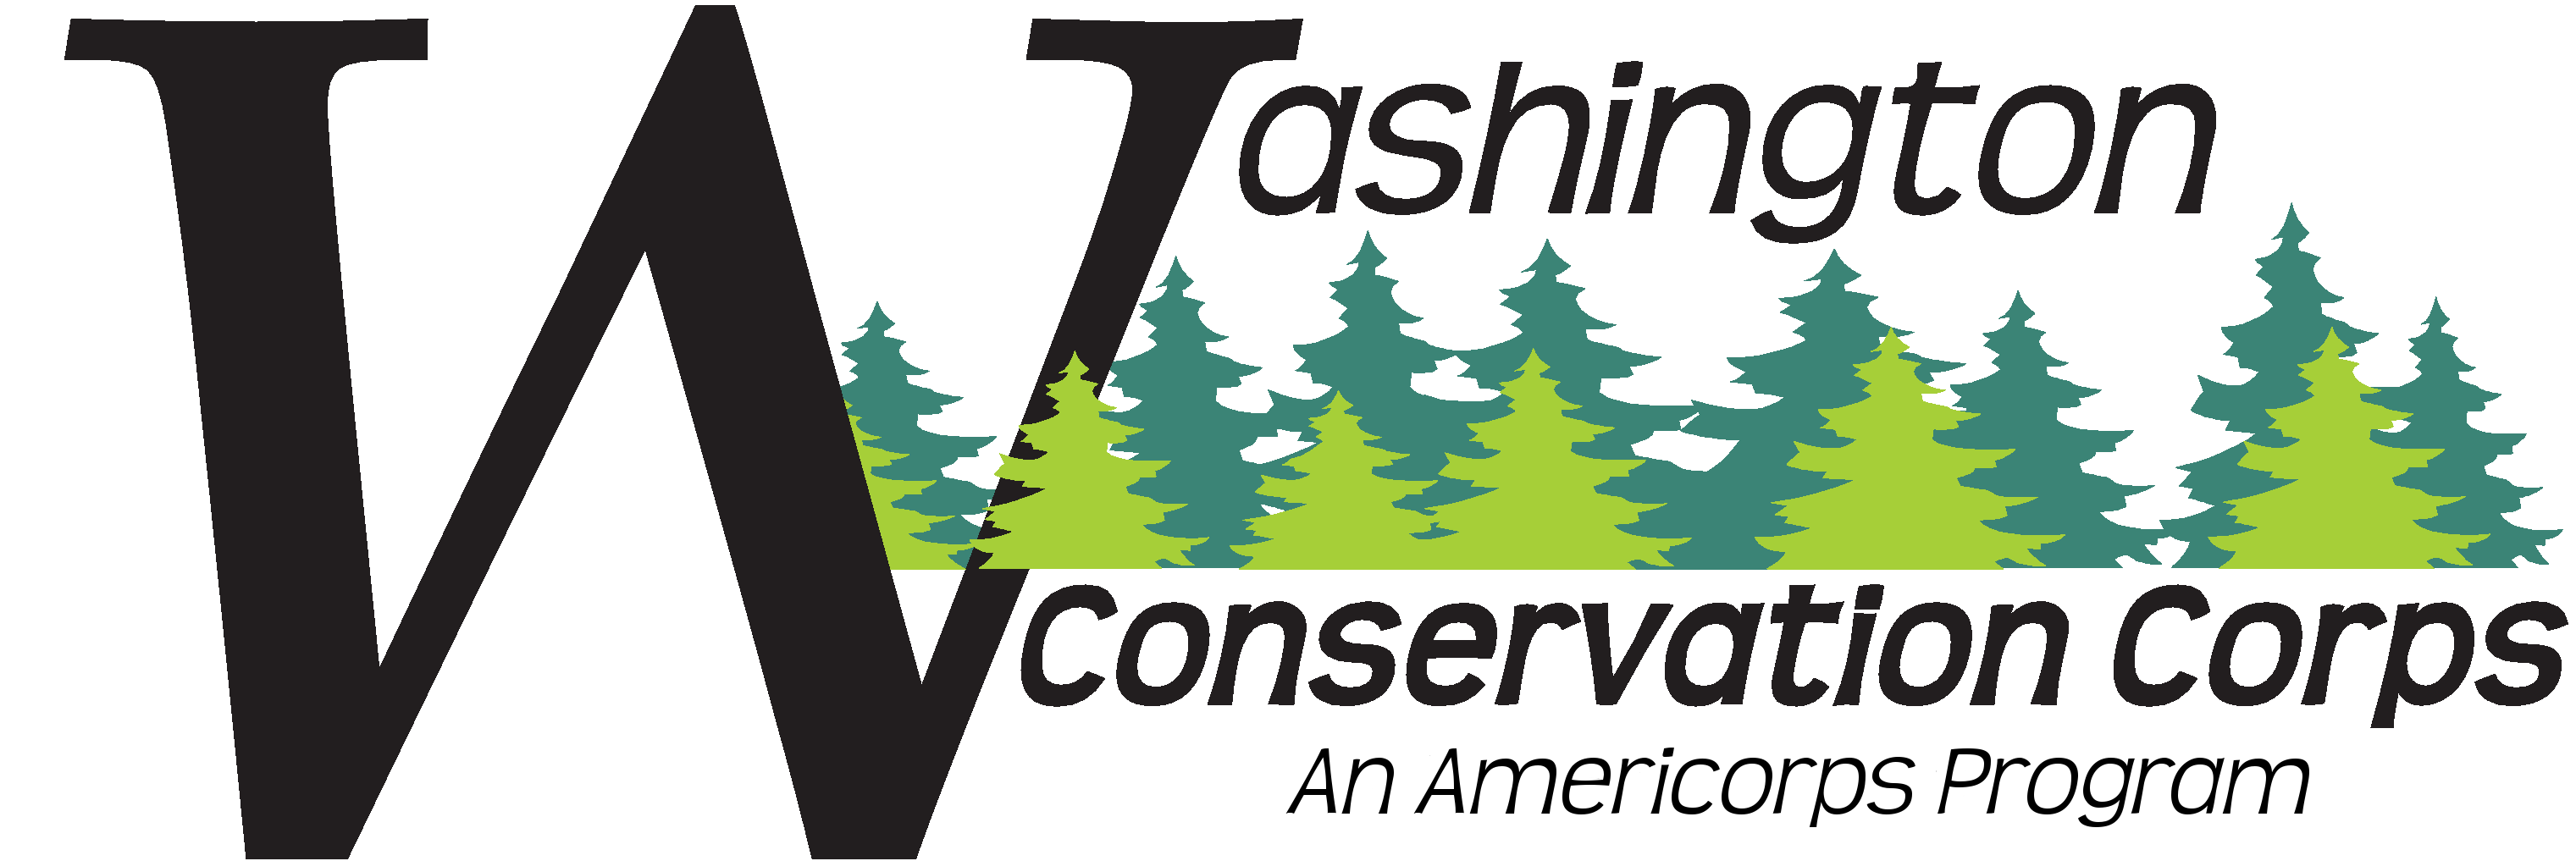 washington_conservation_corps_logo.png